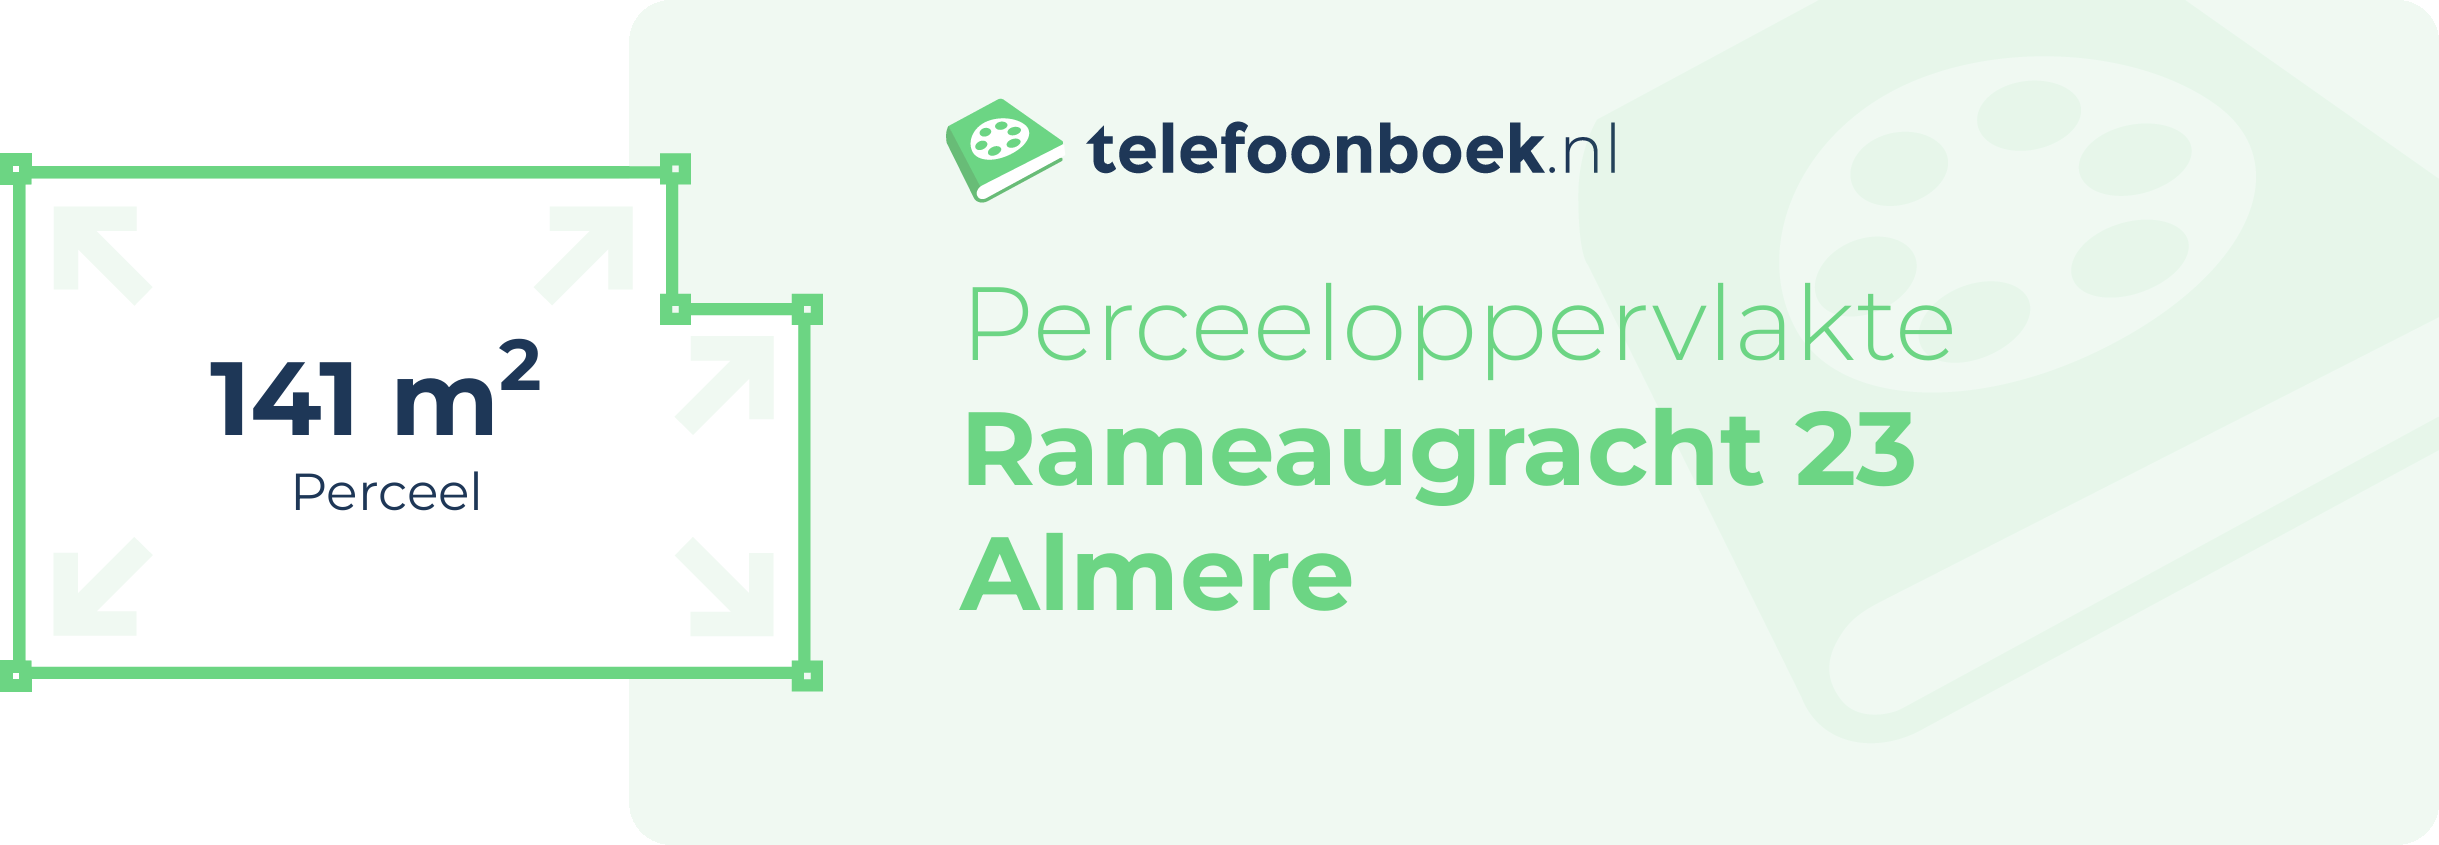 Perceeloppervlakte Rameaugracht 23 Almere